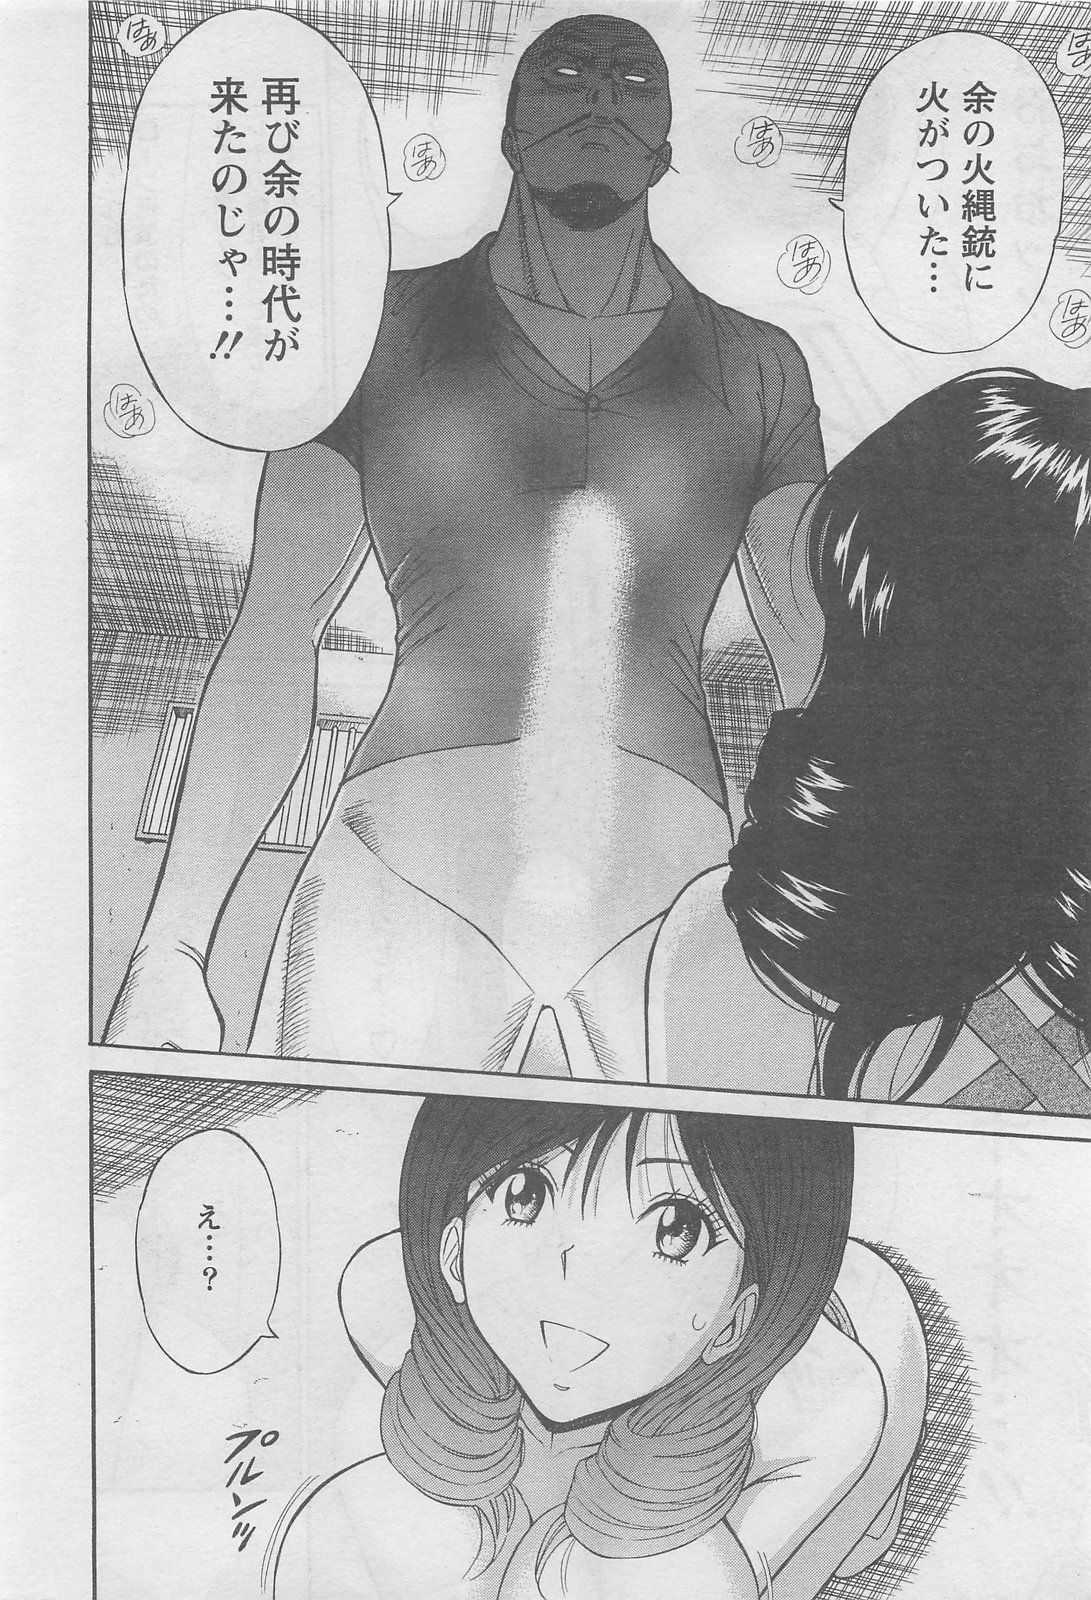 (Adult Manga) [Magazine] Pizazz DX 2008-08 